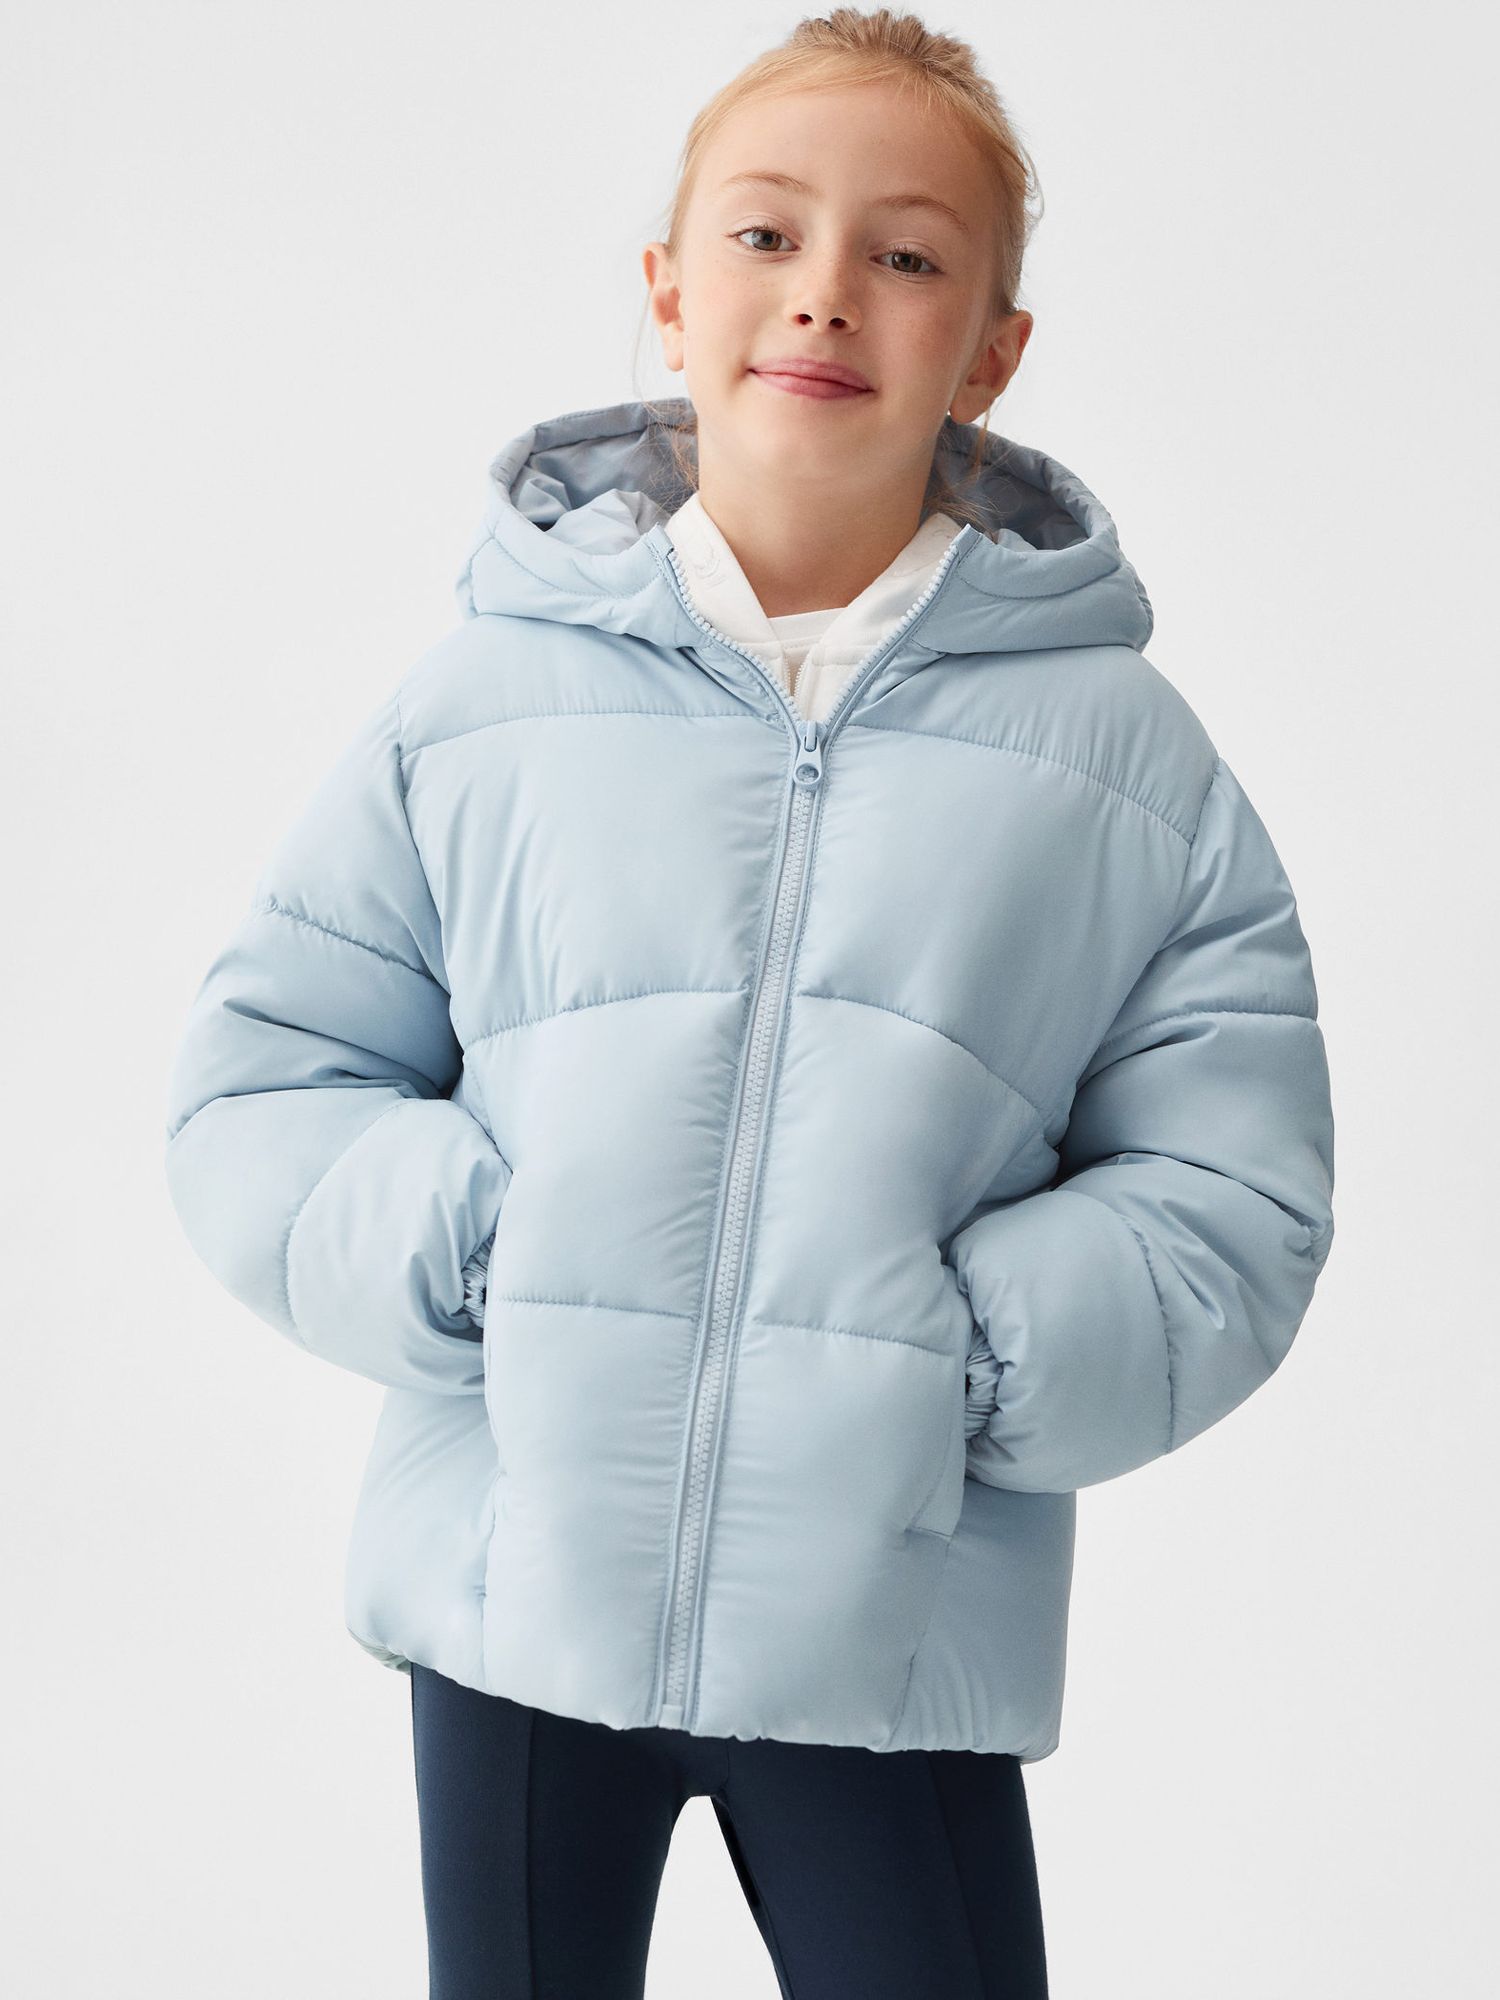 Mango Kids' Ali Hooded Quilted Jacket, Pastel Blue at John Lewis & Partners